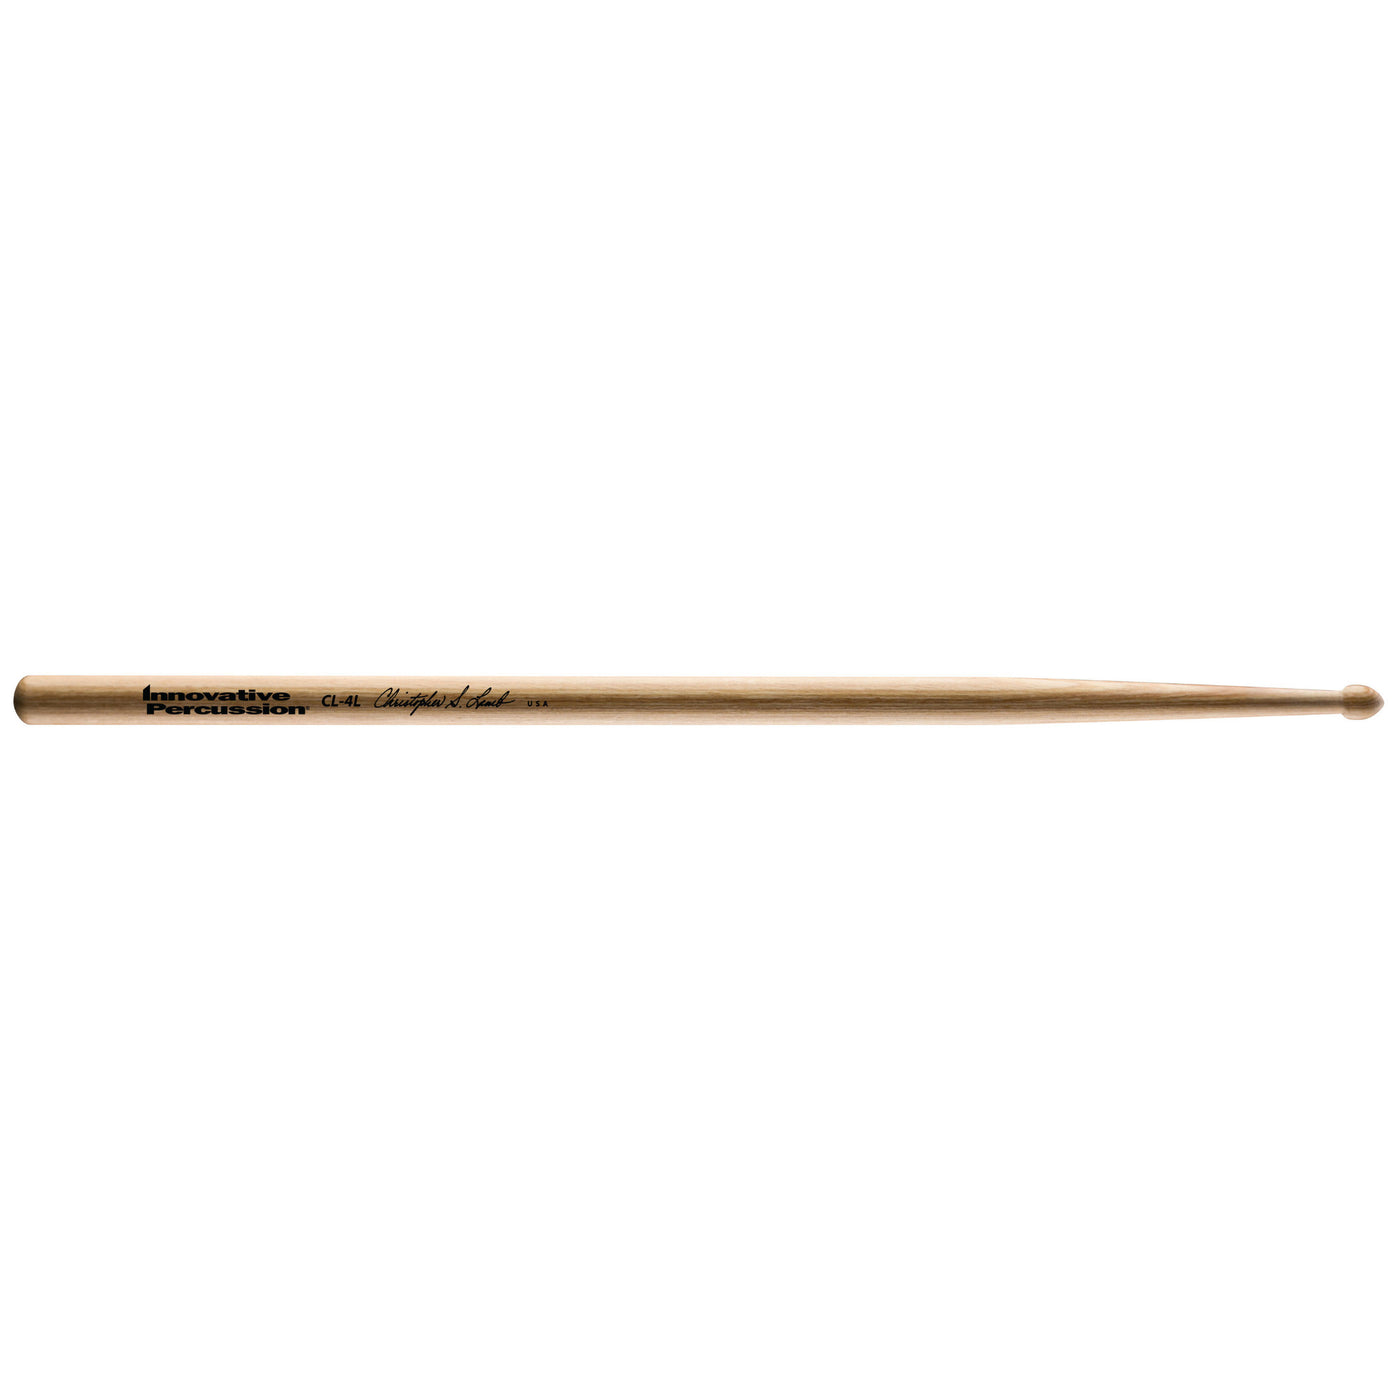 Innovative Percussion CL-4L Drum Stick